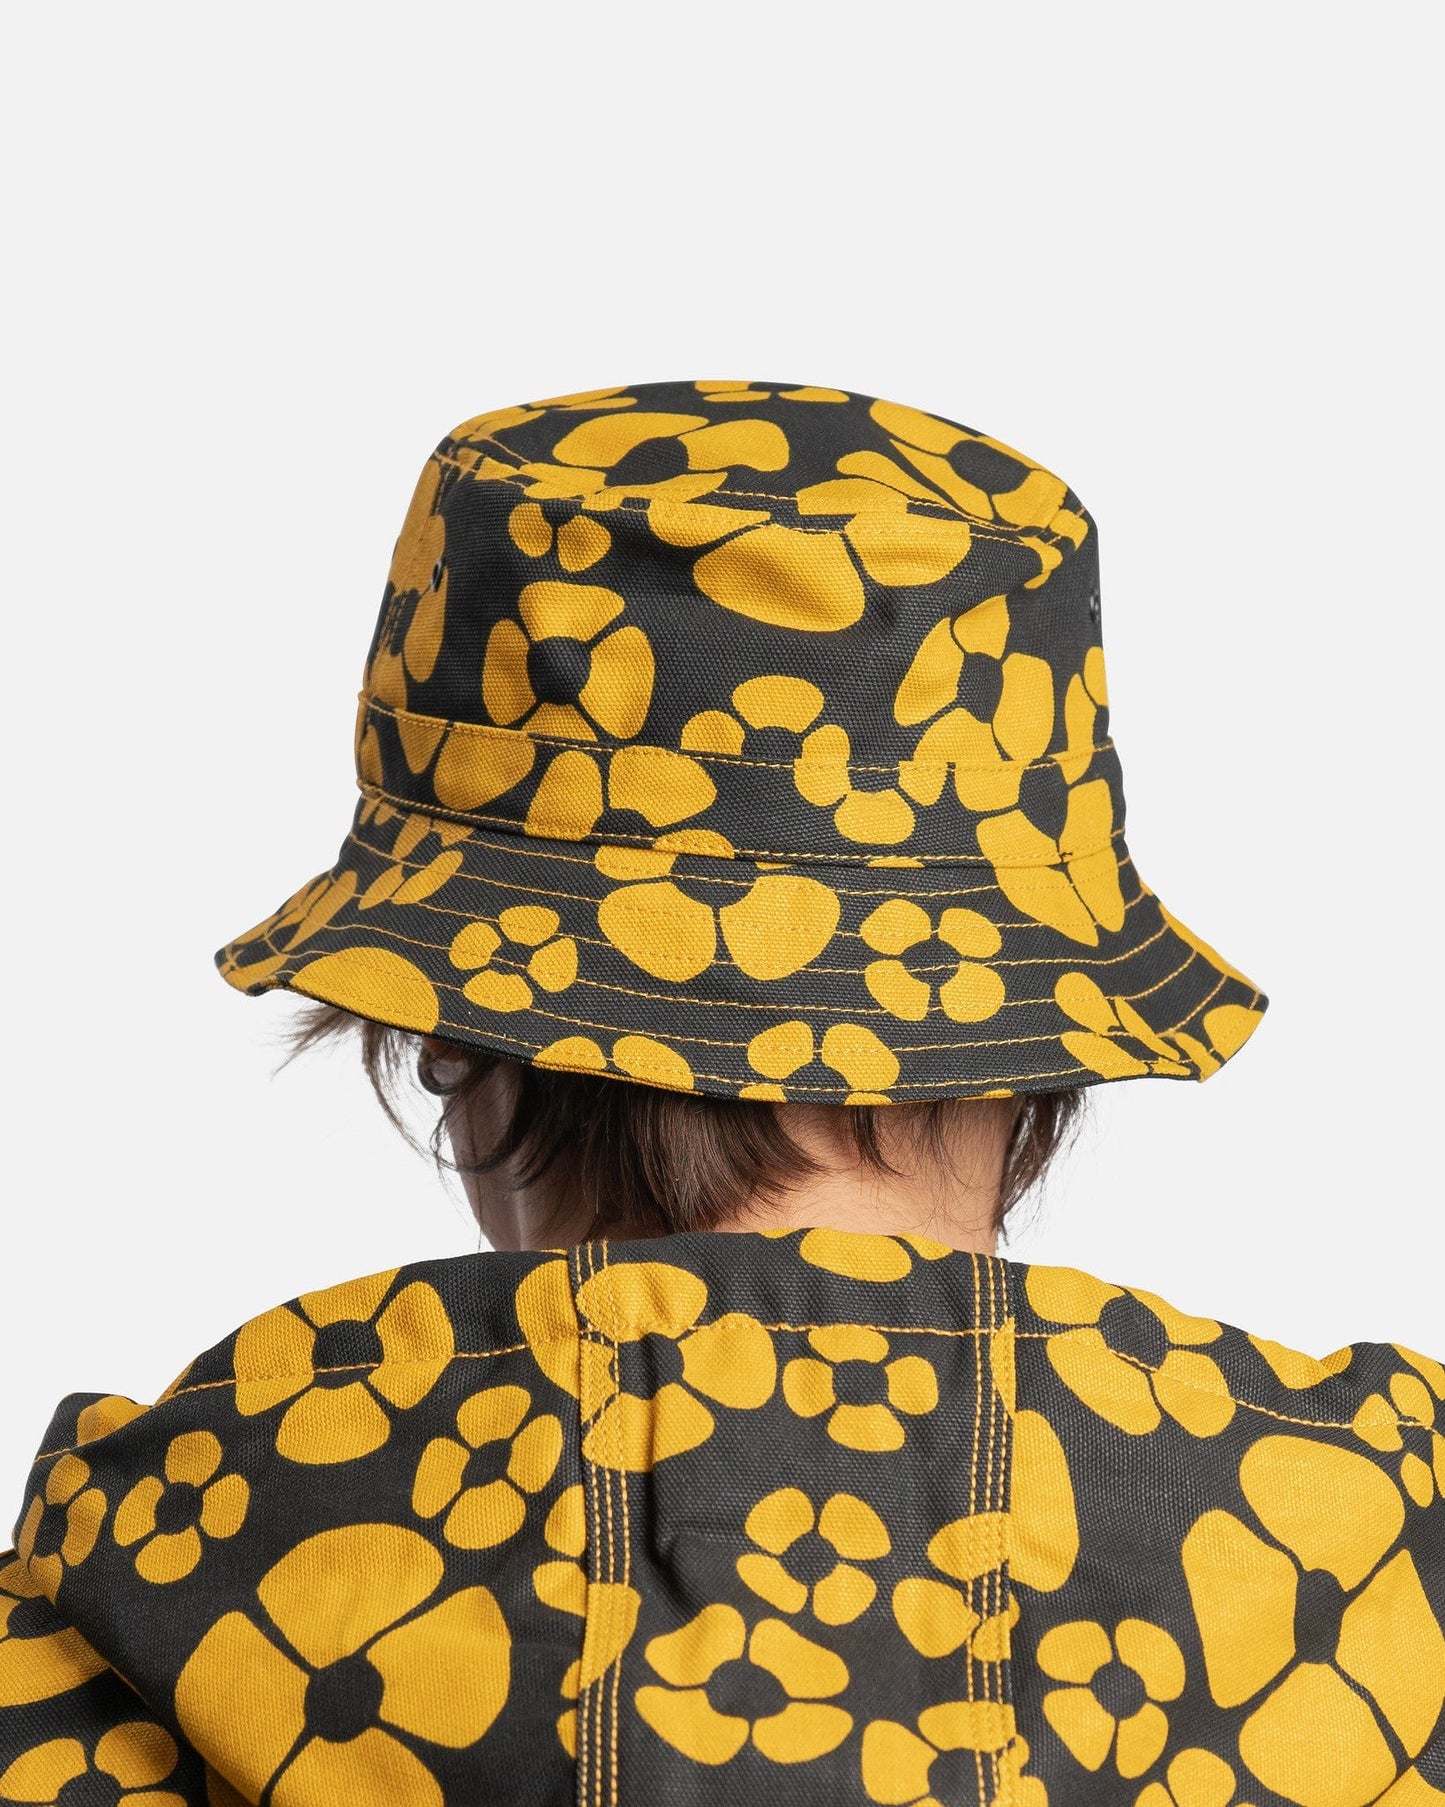 Marni Men's Hats Carhartt Bucket Hat in Sunflower